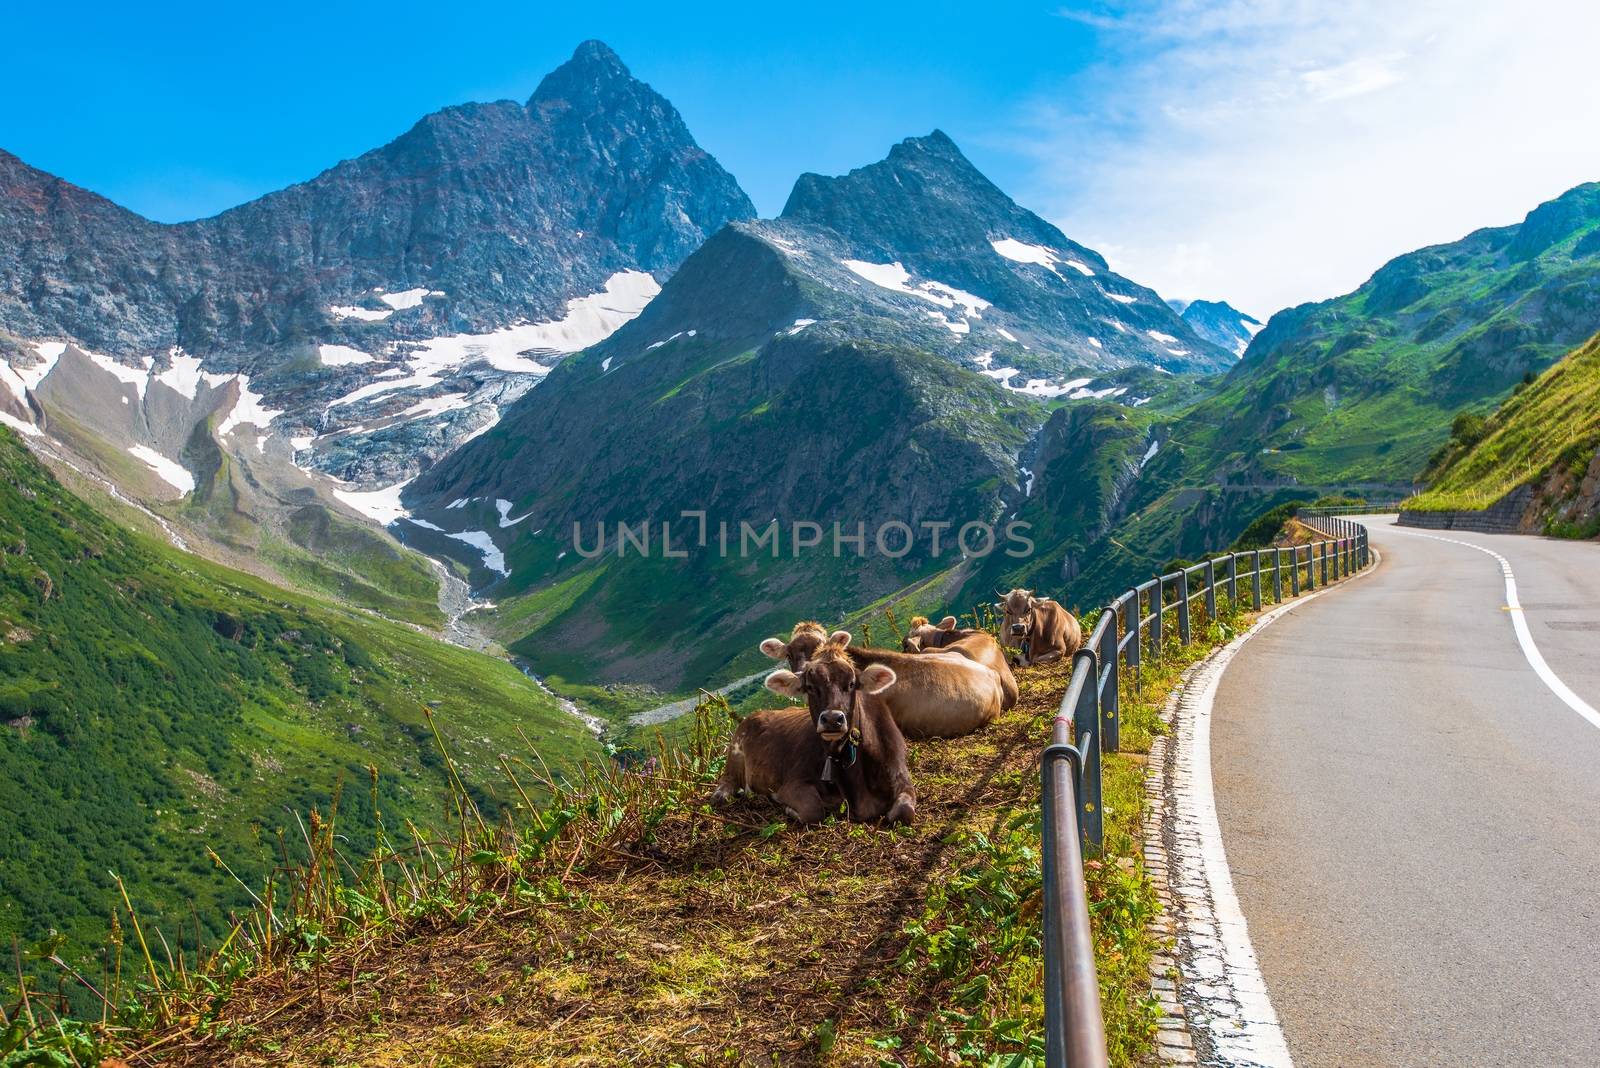 Swiss Alpine Milk Cows on the Side of Winding Mountain Road. Switzerland, Europe.